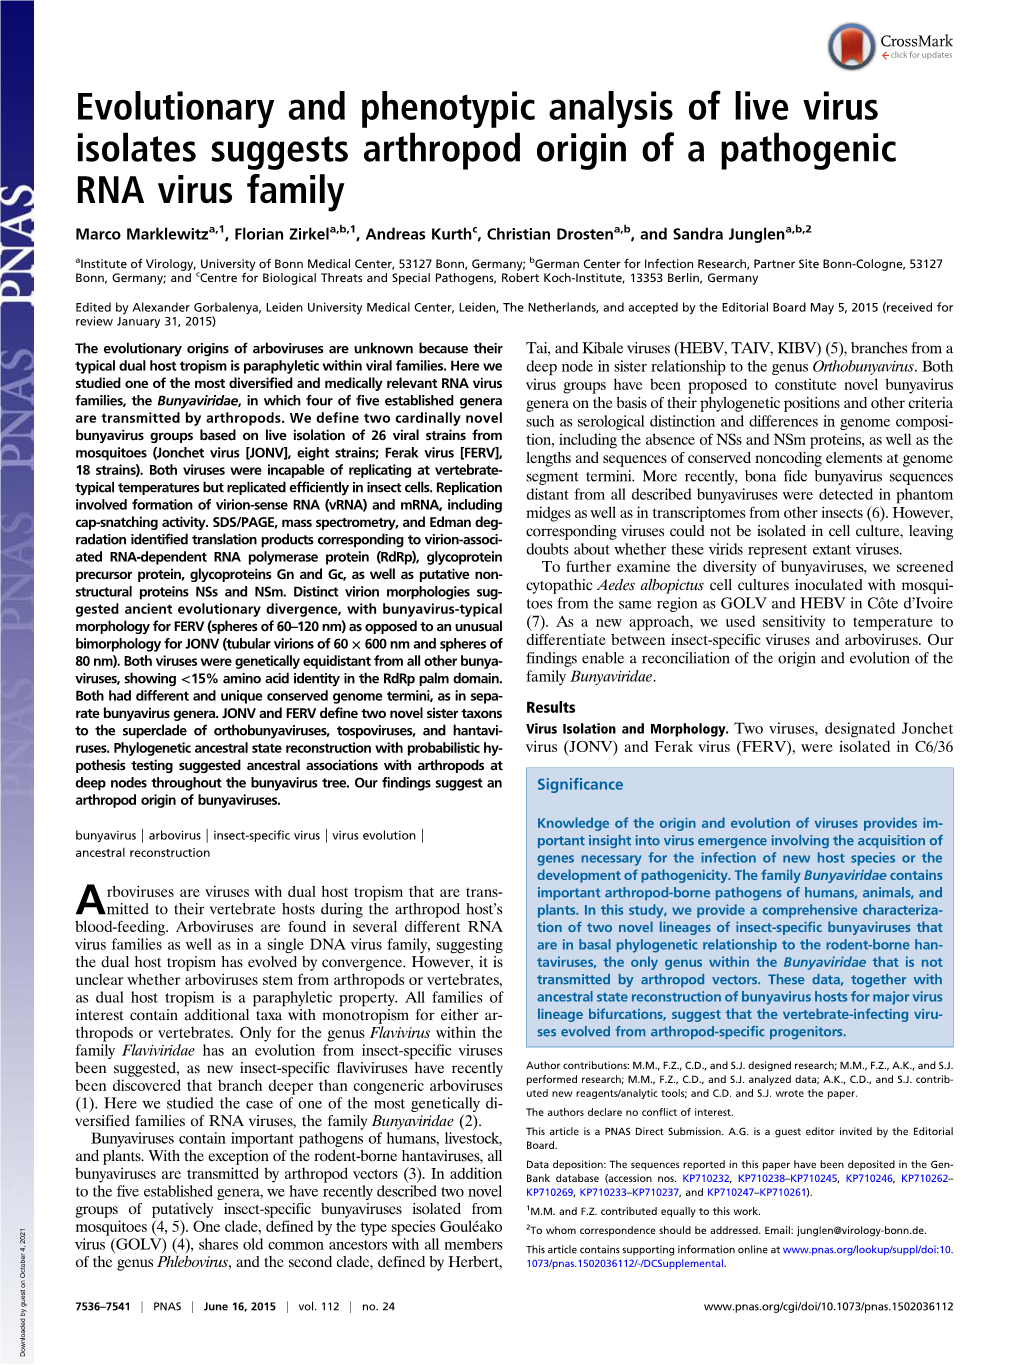 Evolutionary and Phenotypic Analysis of Live Virus Isolates Suggests Arthropod Origin of a Pathogenic RNA Virus Family